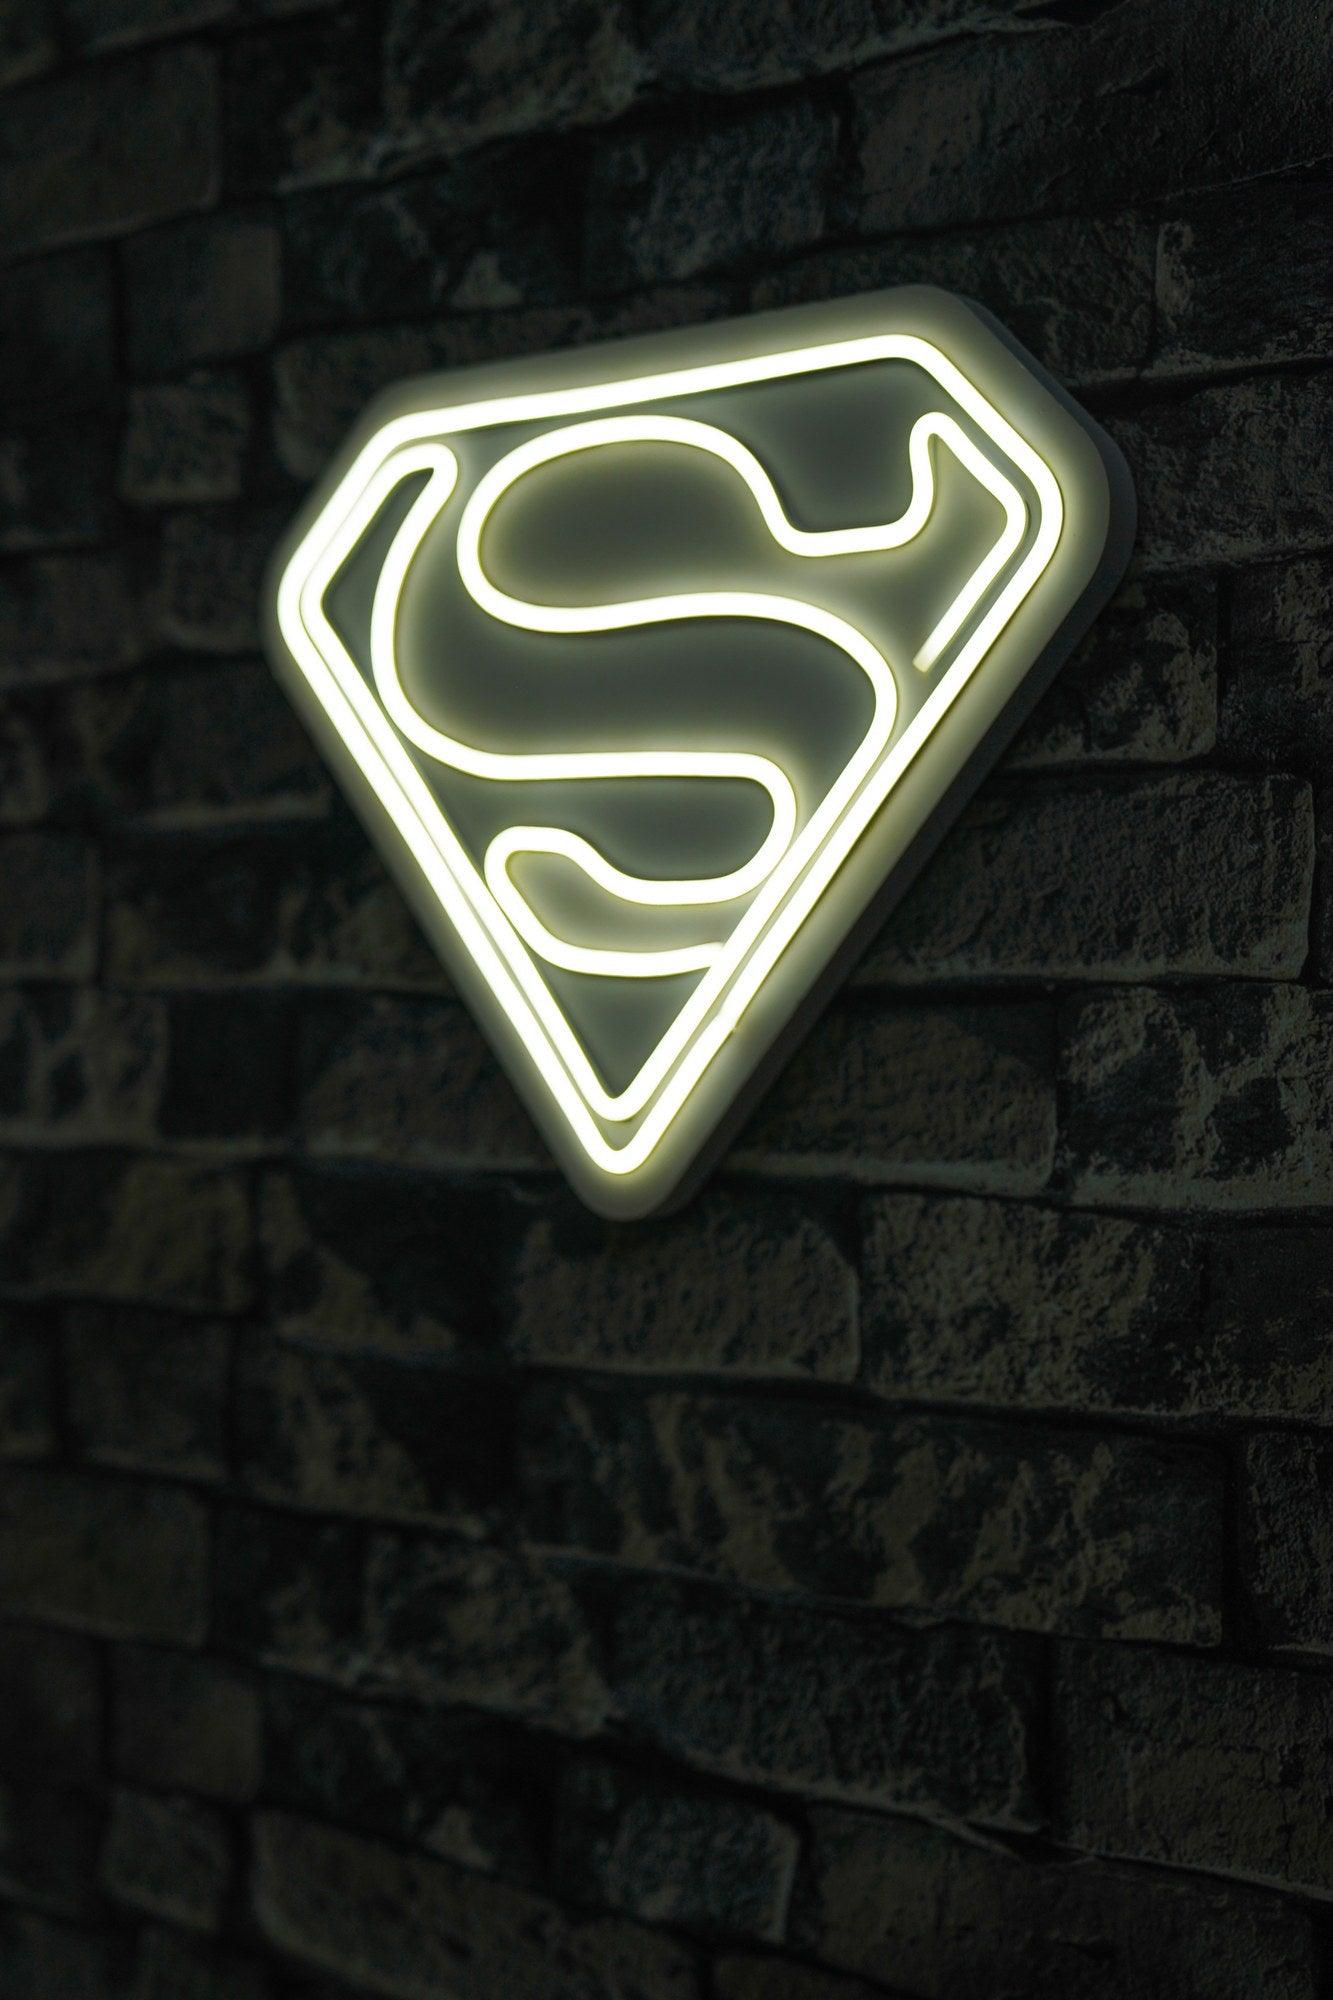 Lampa Neon Superman